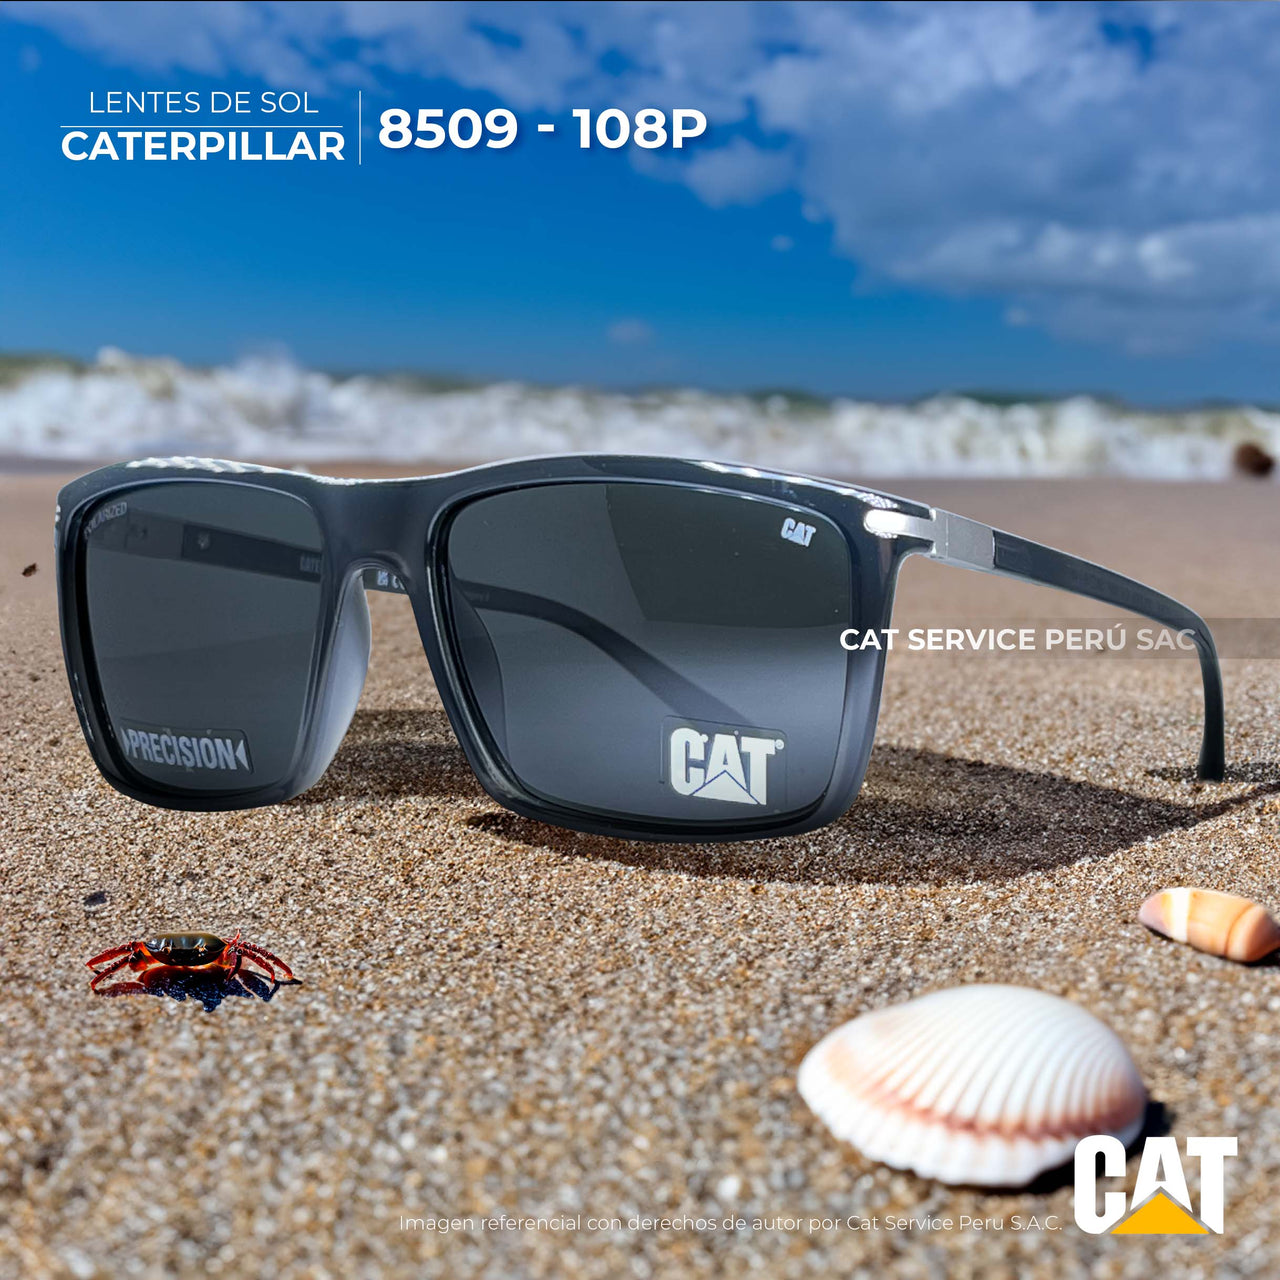 Cat CPS-8509-108P Opaque Gray Polarized Sunglasses 